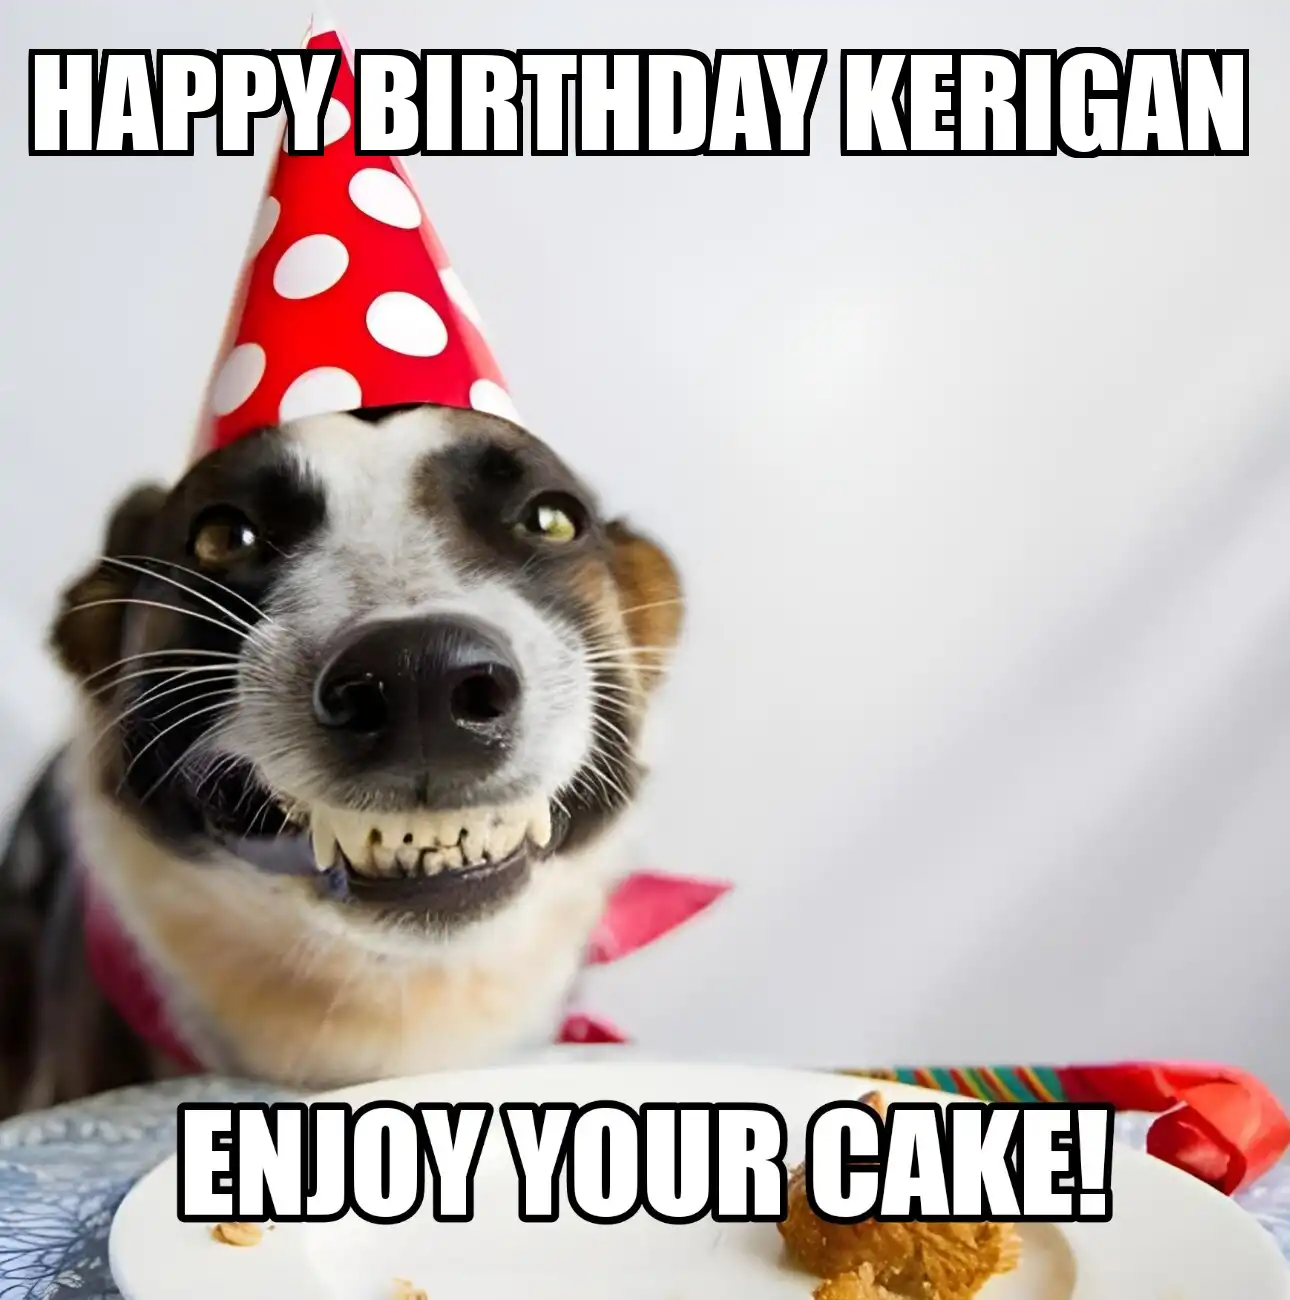 Happy Birthday Kerigan Enjoy Your Cake Dog Meme